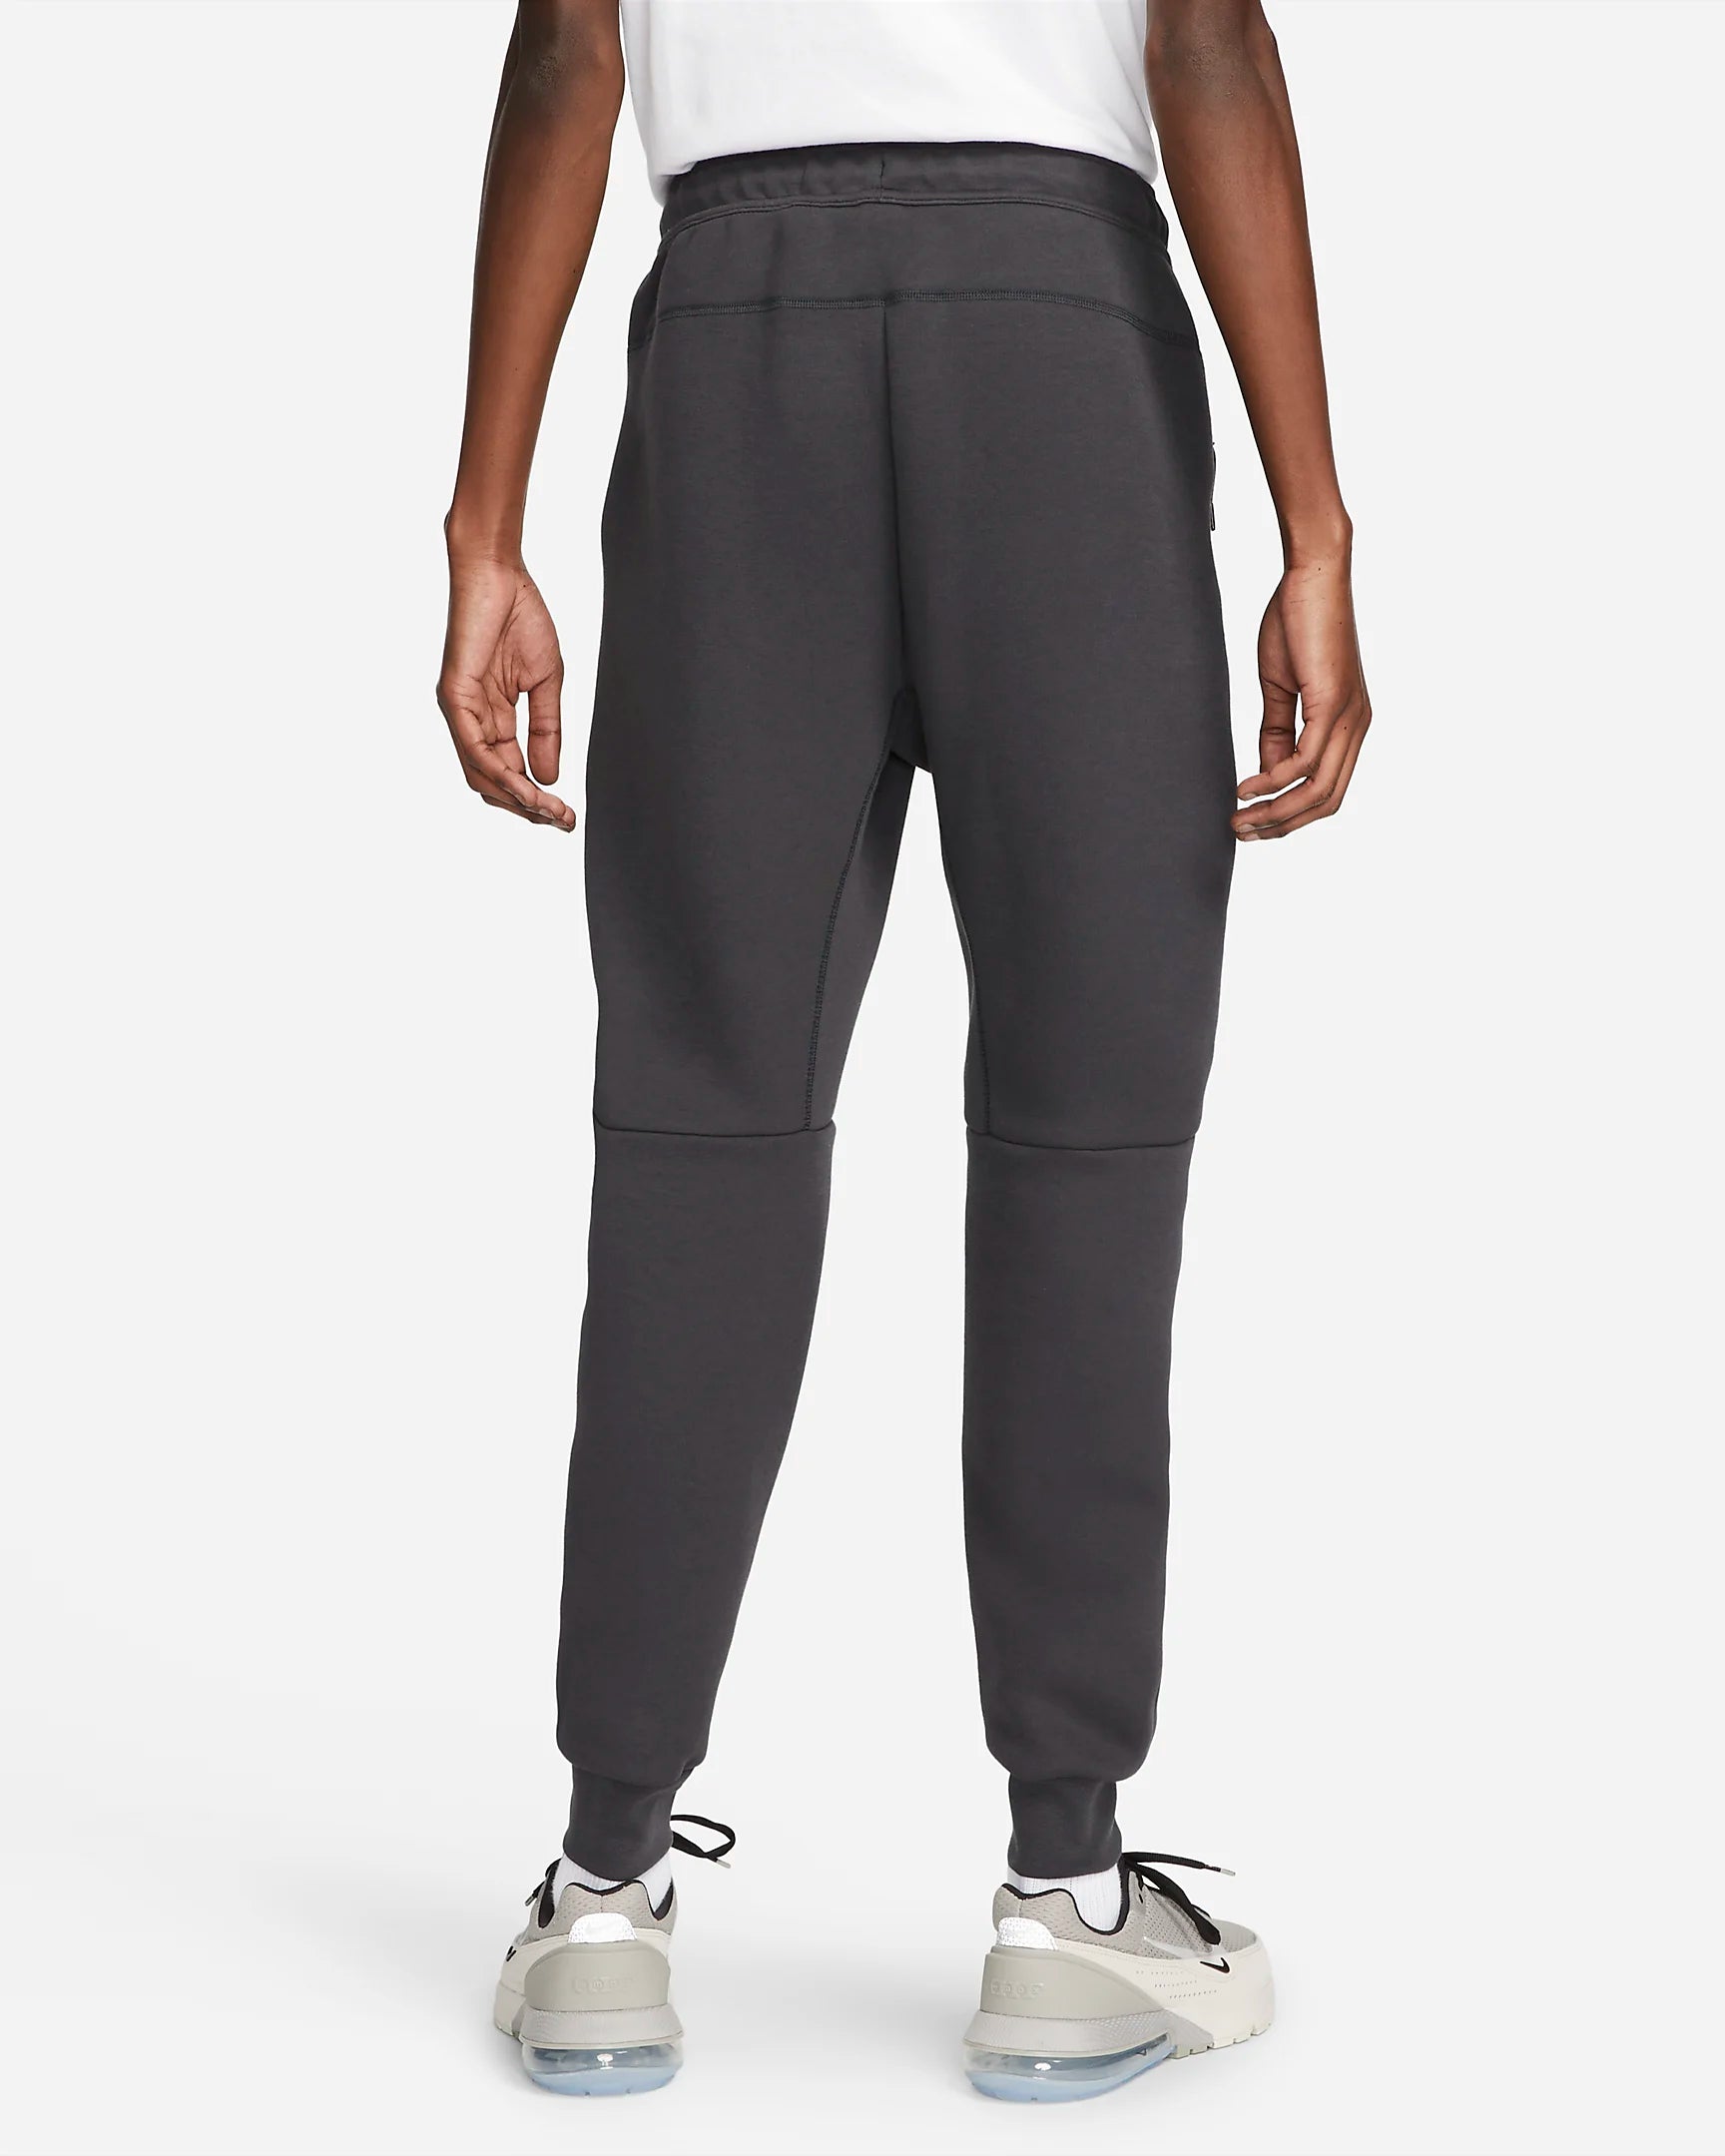 Pantalon Nike Tech Fleece - Noir/Gris Anthracite